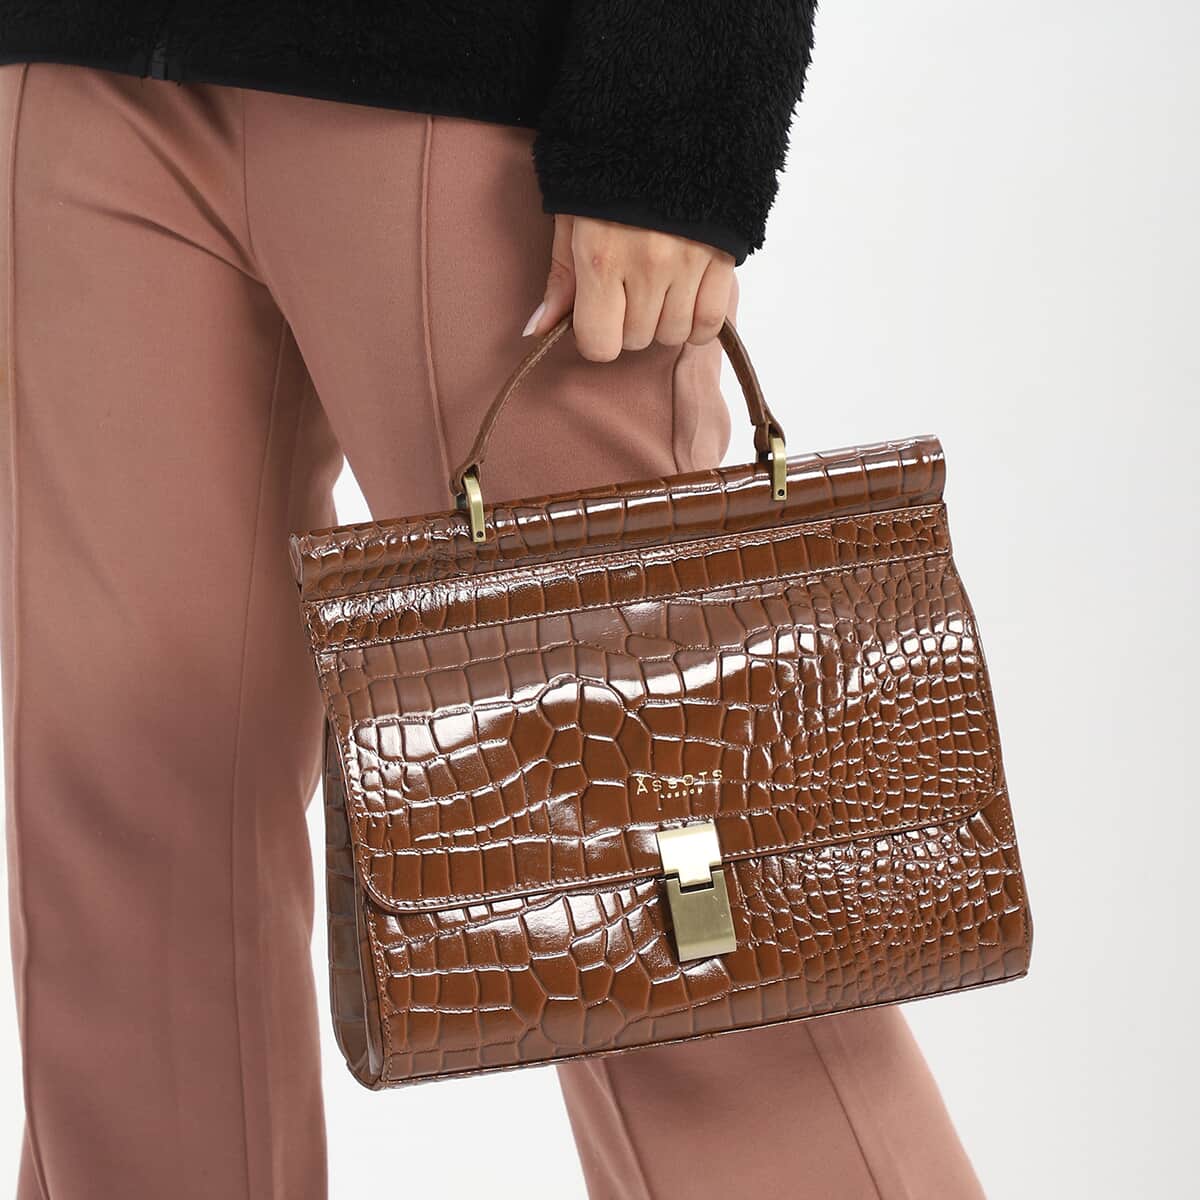 Assots London Tan Genuine Leather Croco Embossed Satchel Bag, Ladies Purse Handbag With Adjustable & Detachable Shoulder Strap And Button Closure (11.61X3.54X9.64) image number 1